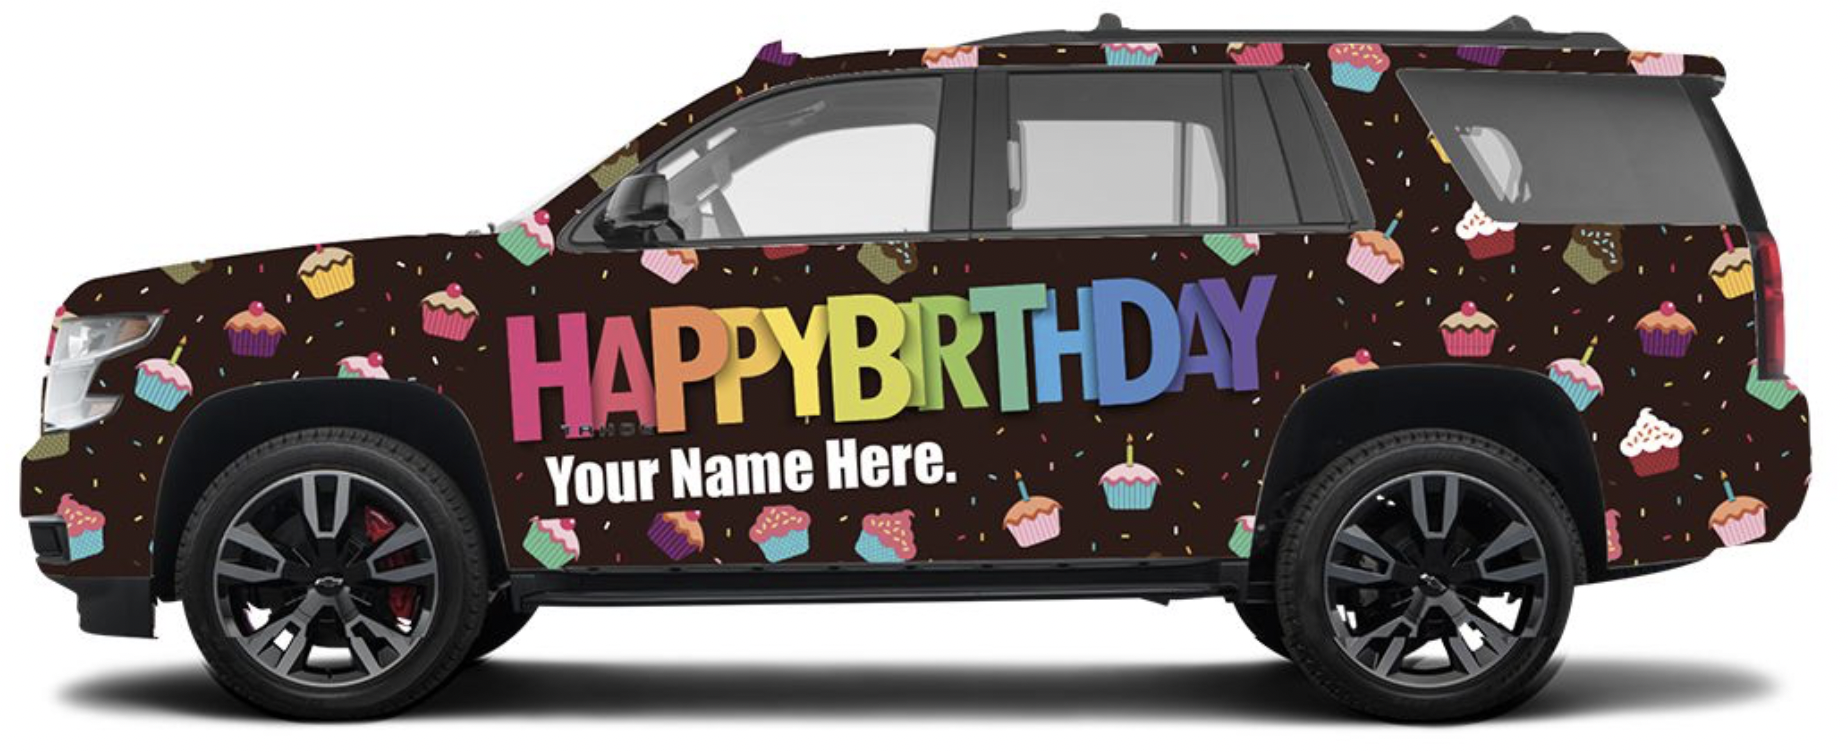 a car with a birthday sign